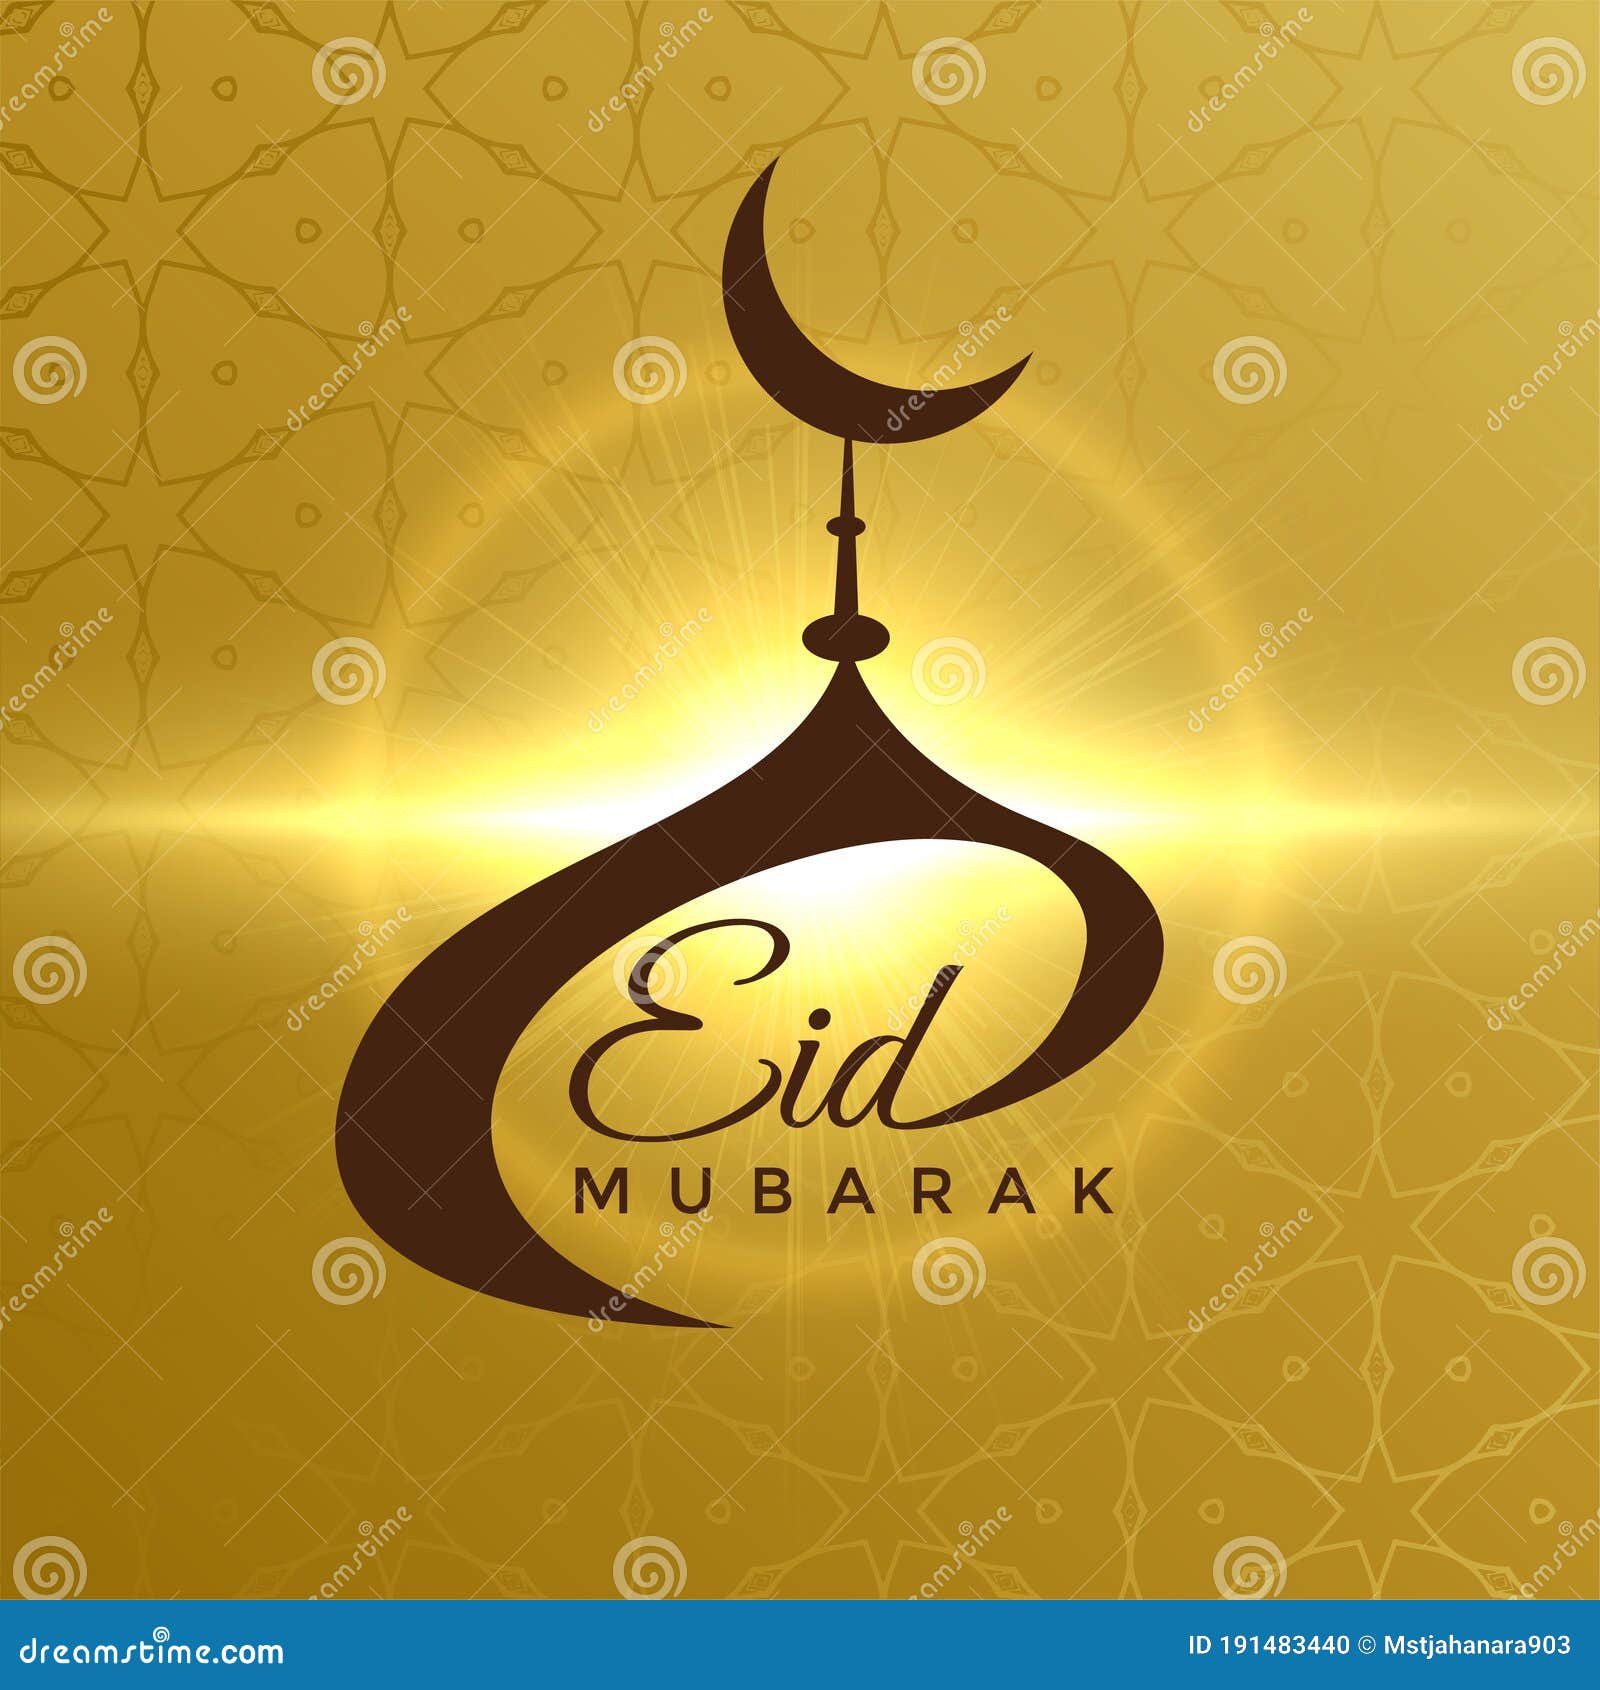 Creative Mosque Design For Eid Mubarak Festival Stock Vector